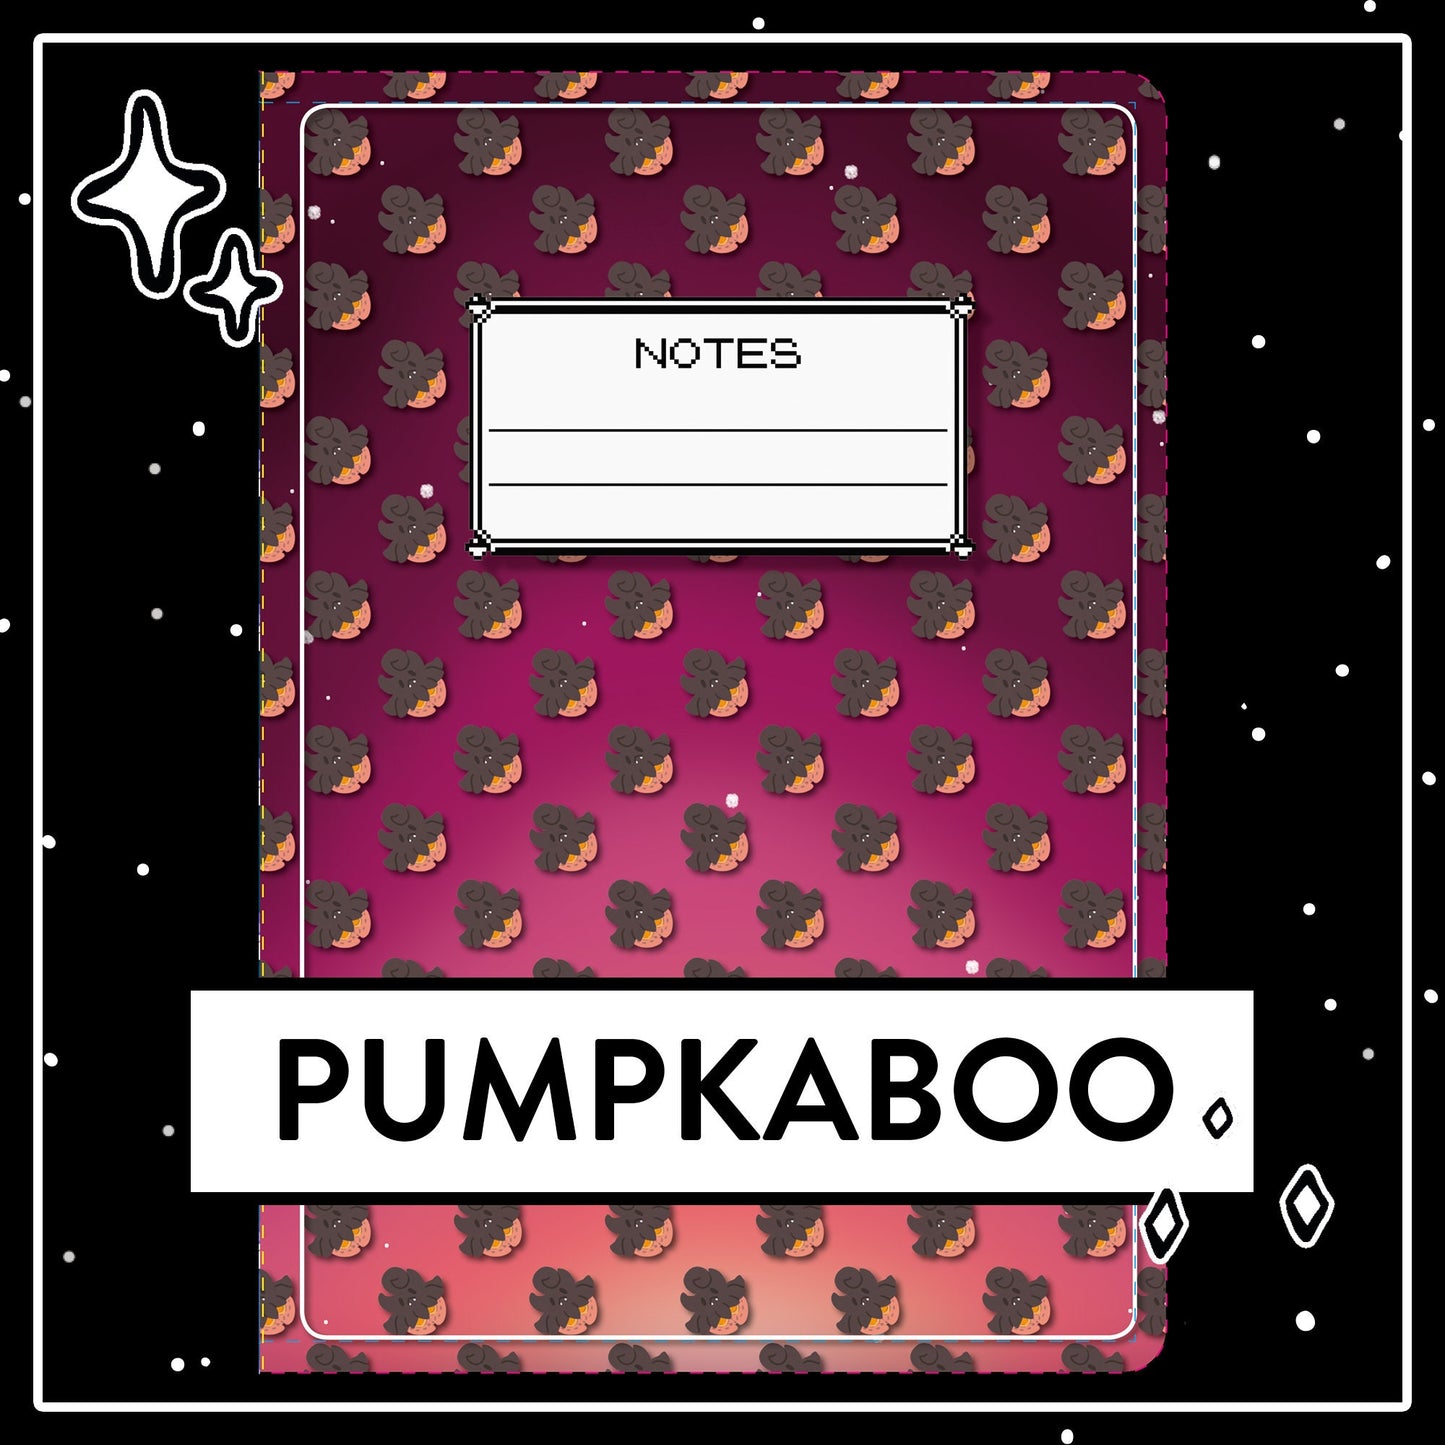 Pokemon Halloween Notebooks - Gengar Mimikyu Litwick Pumpkaboo Design, Pokémon pattern, cute Halloween stationary, School Supply